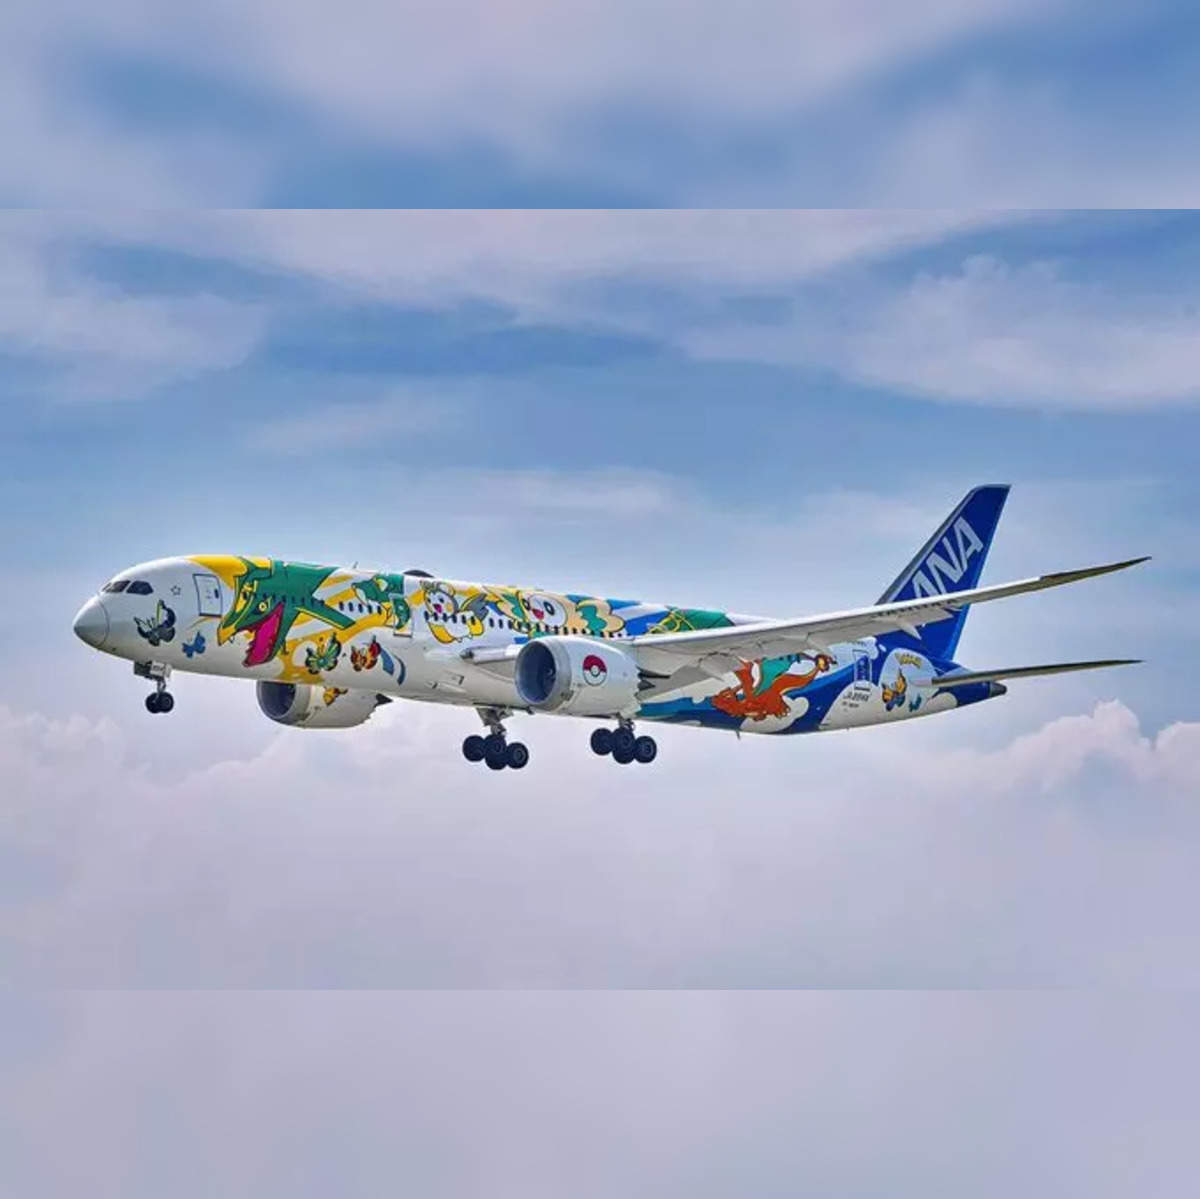 Pokemon Aircraft: Pikachu Jet soars across Delhi skies; Japan's ANA  launches new aircraft - The Economic Times